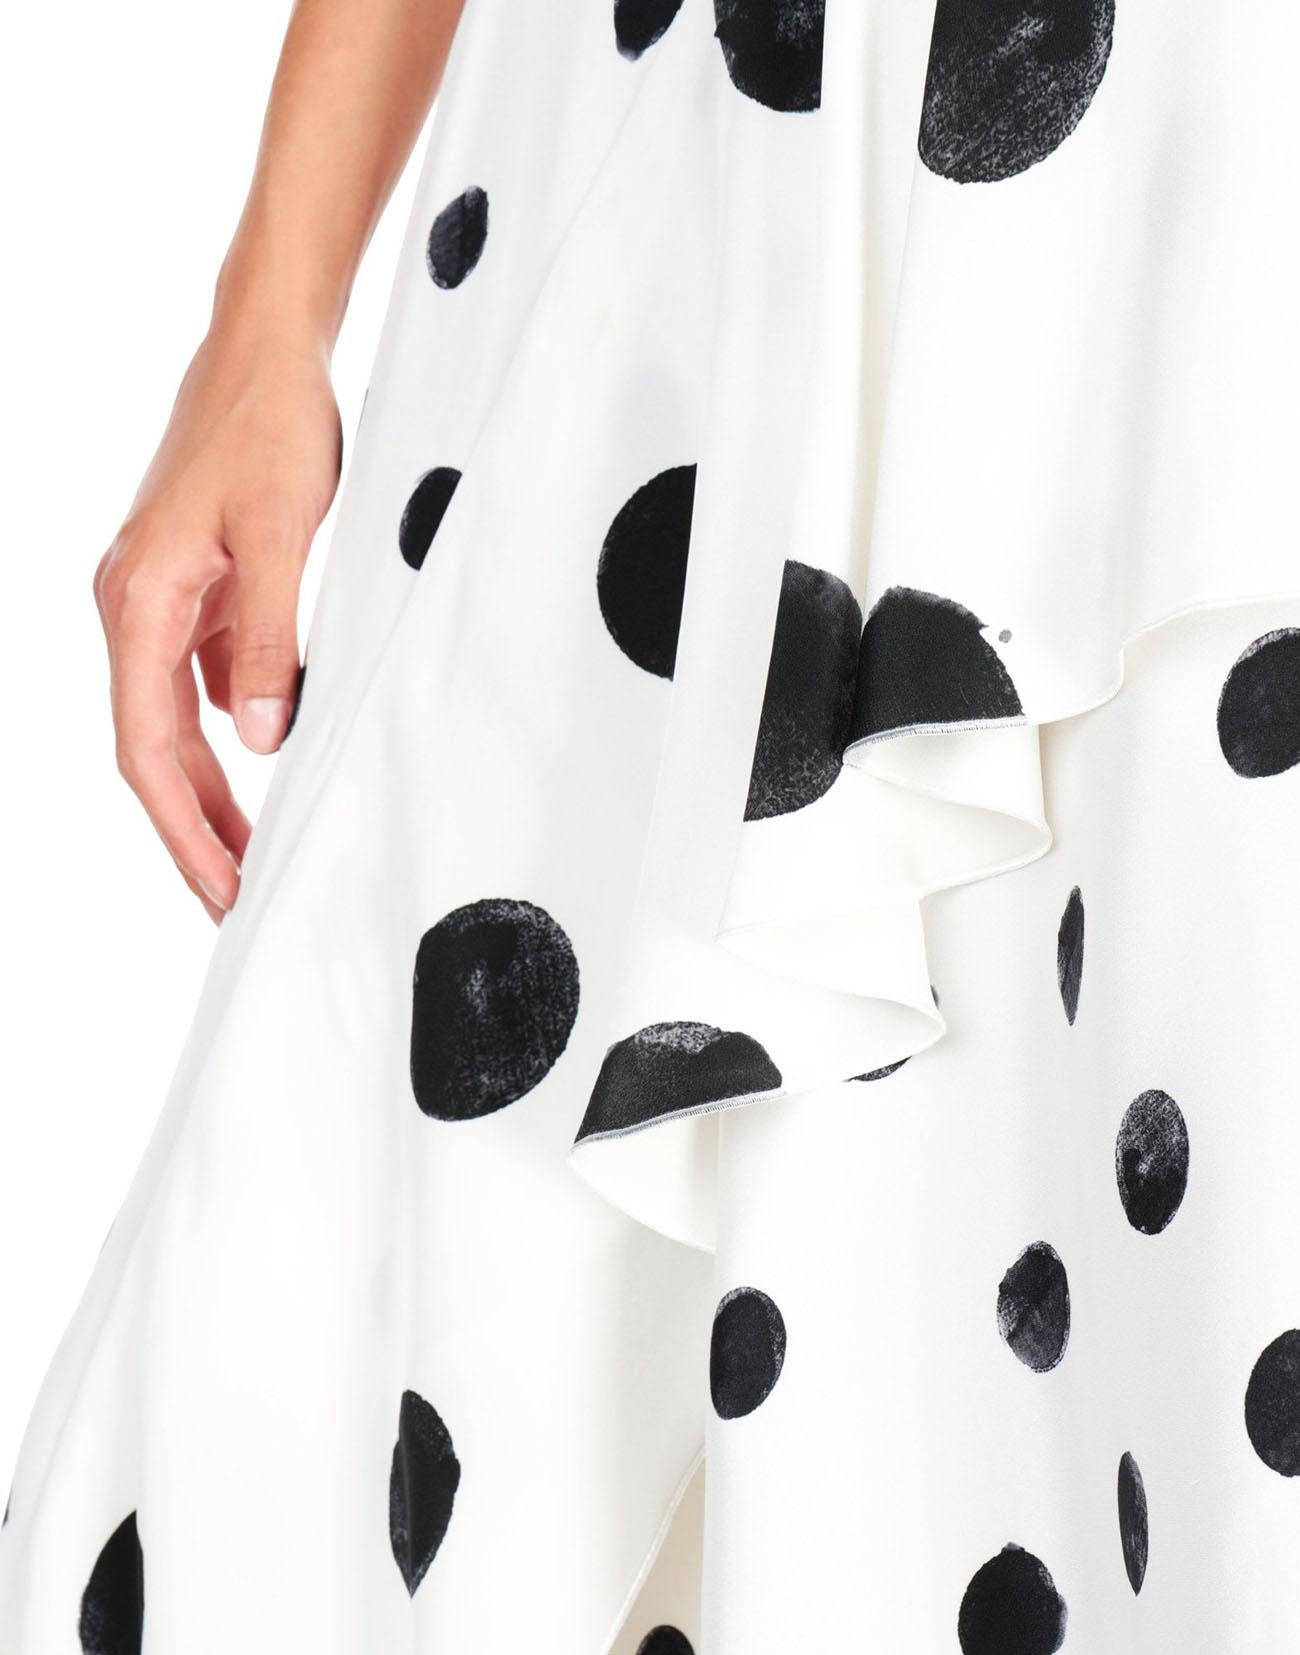 New Oscar De La Renta White Polka Dot Silk Crepe Tiered Skirt Dress Gown size 4 For Sale 3